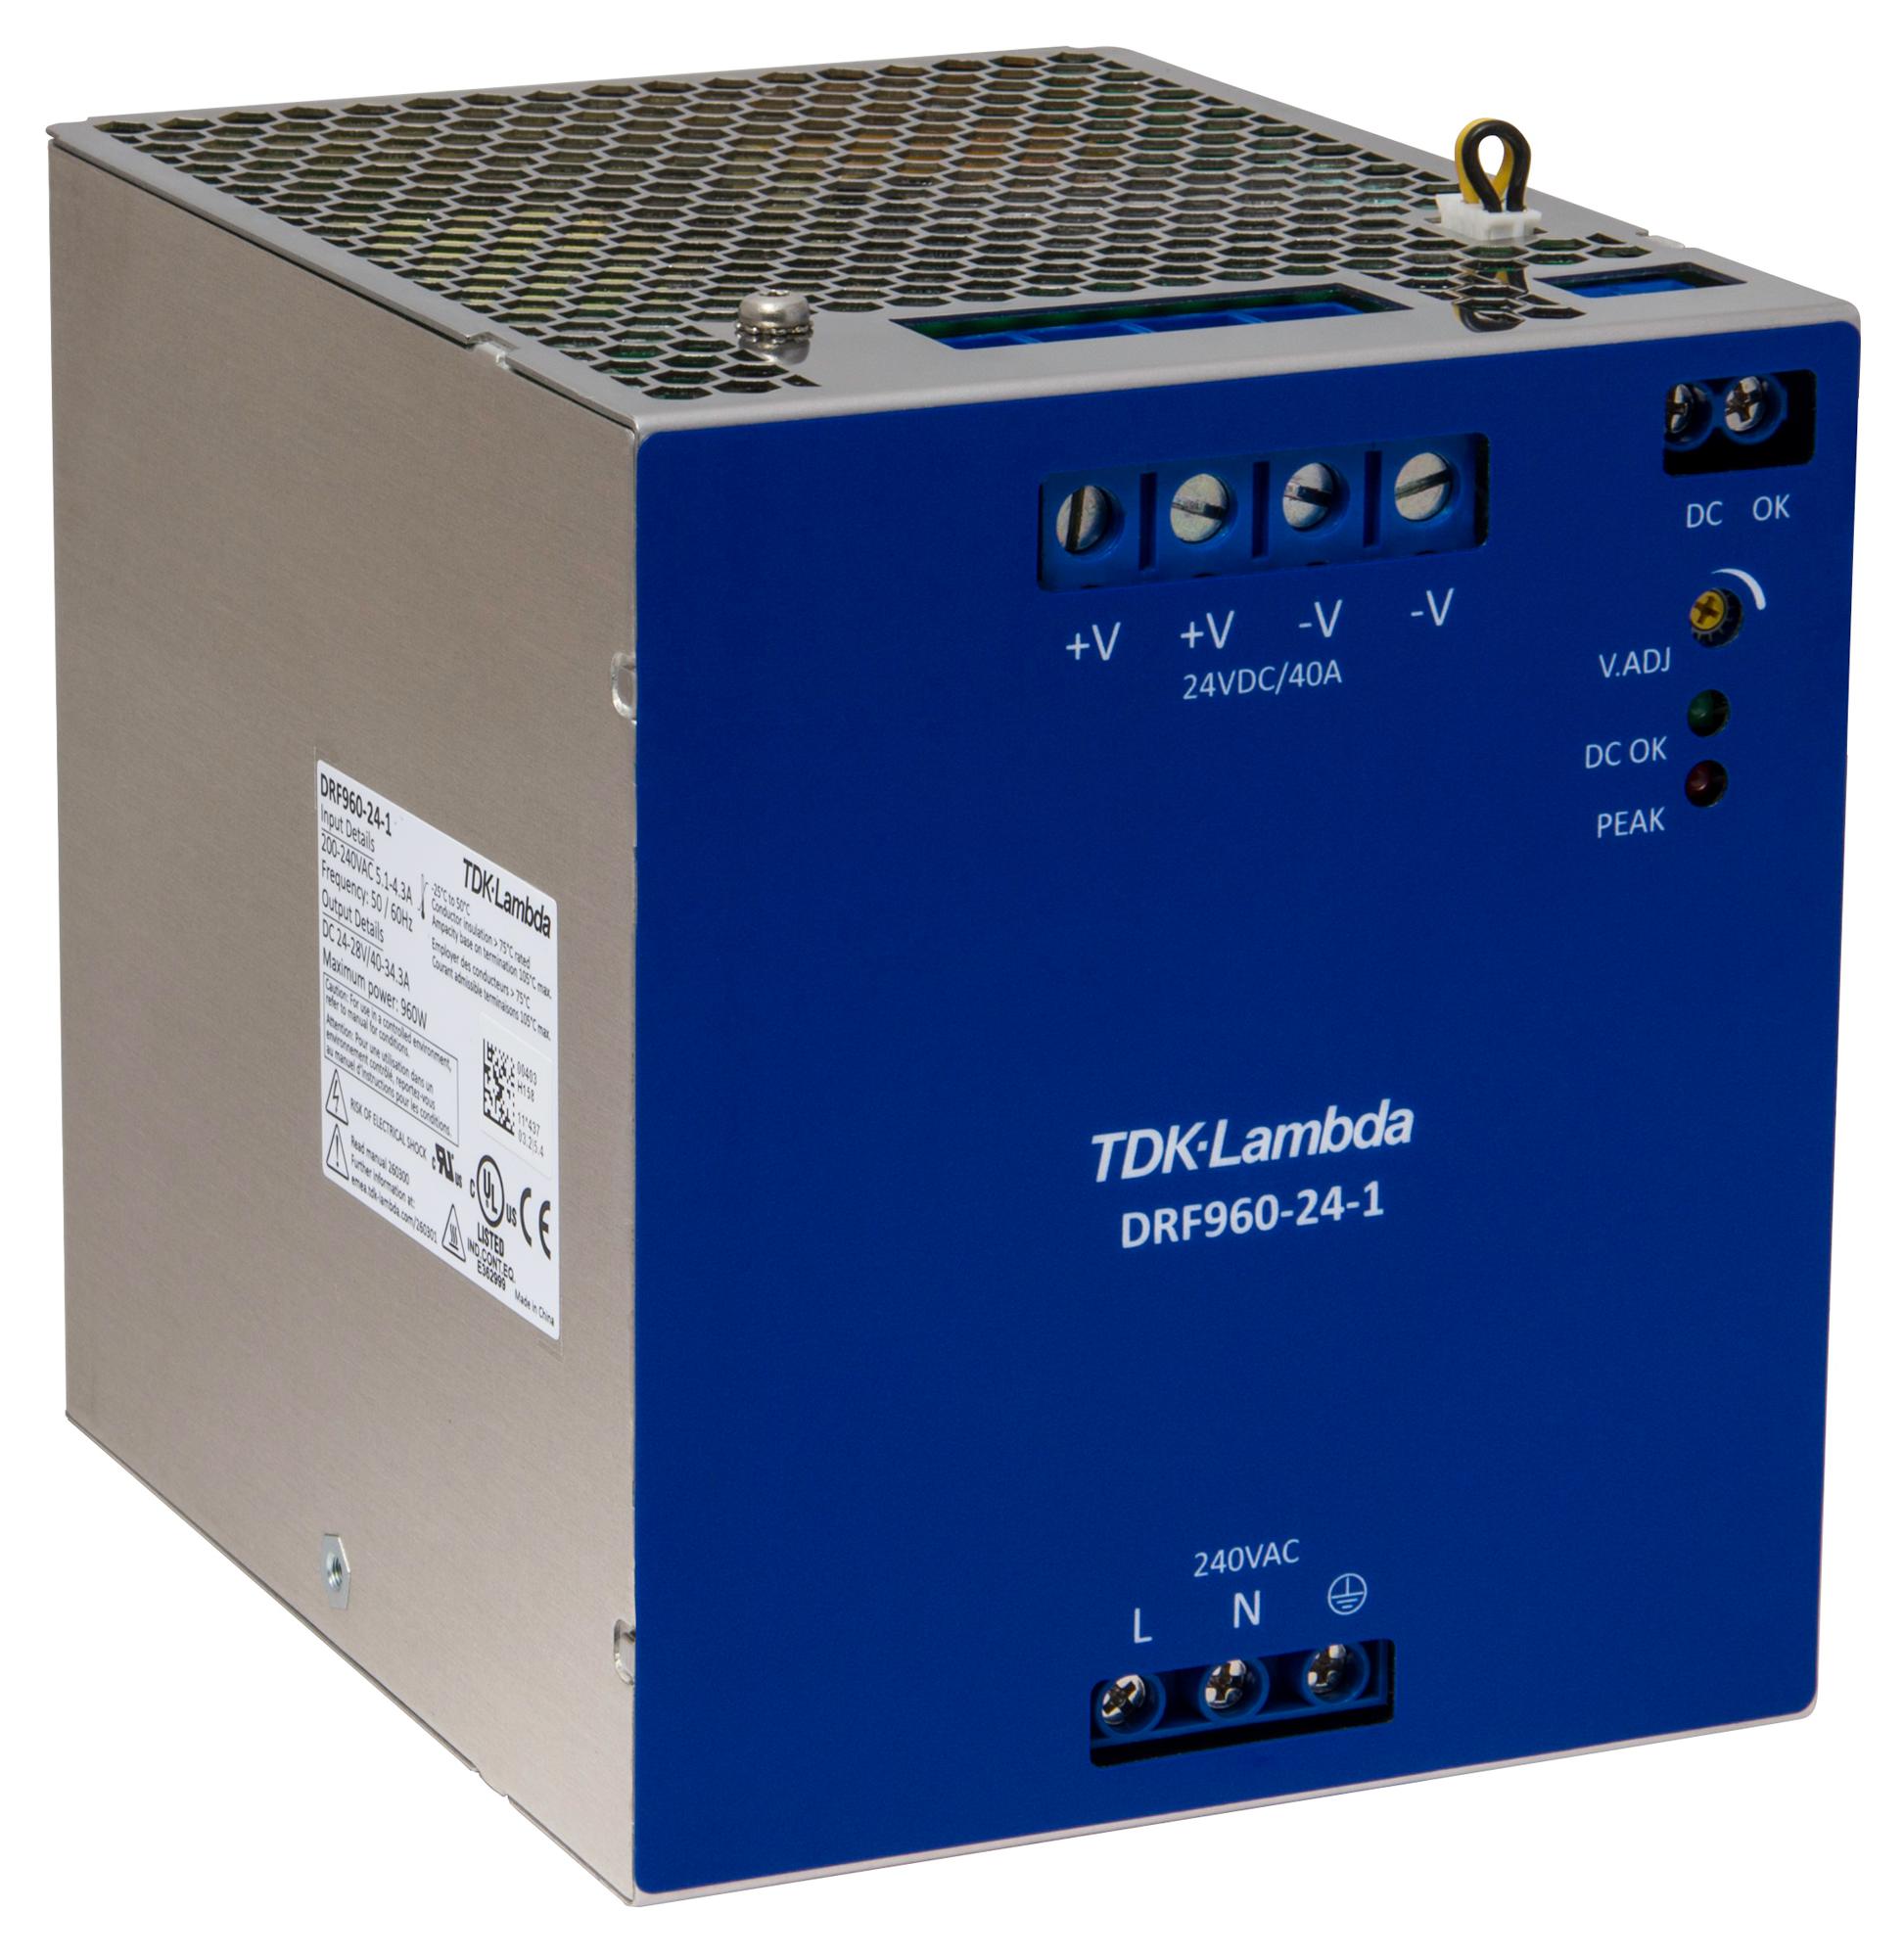 TDK-Lambda Drf960-24-1 Power Supply, Ac-Dc, 24V, 40A